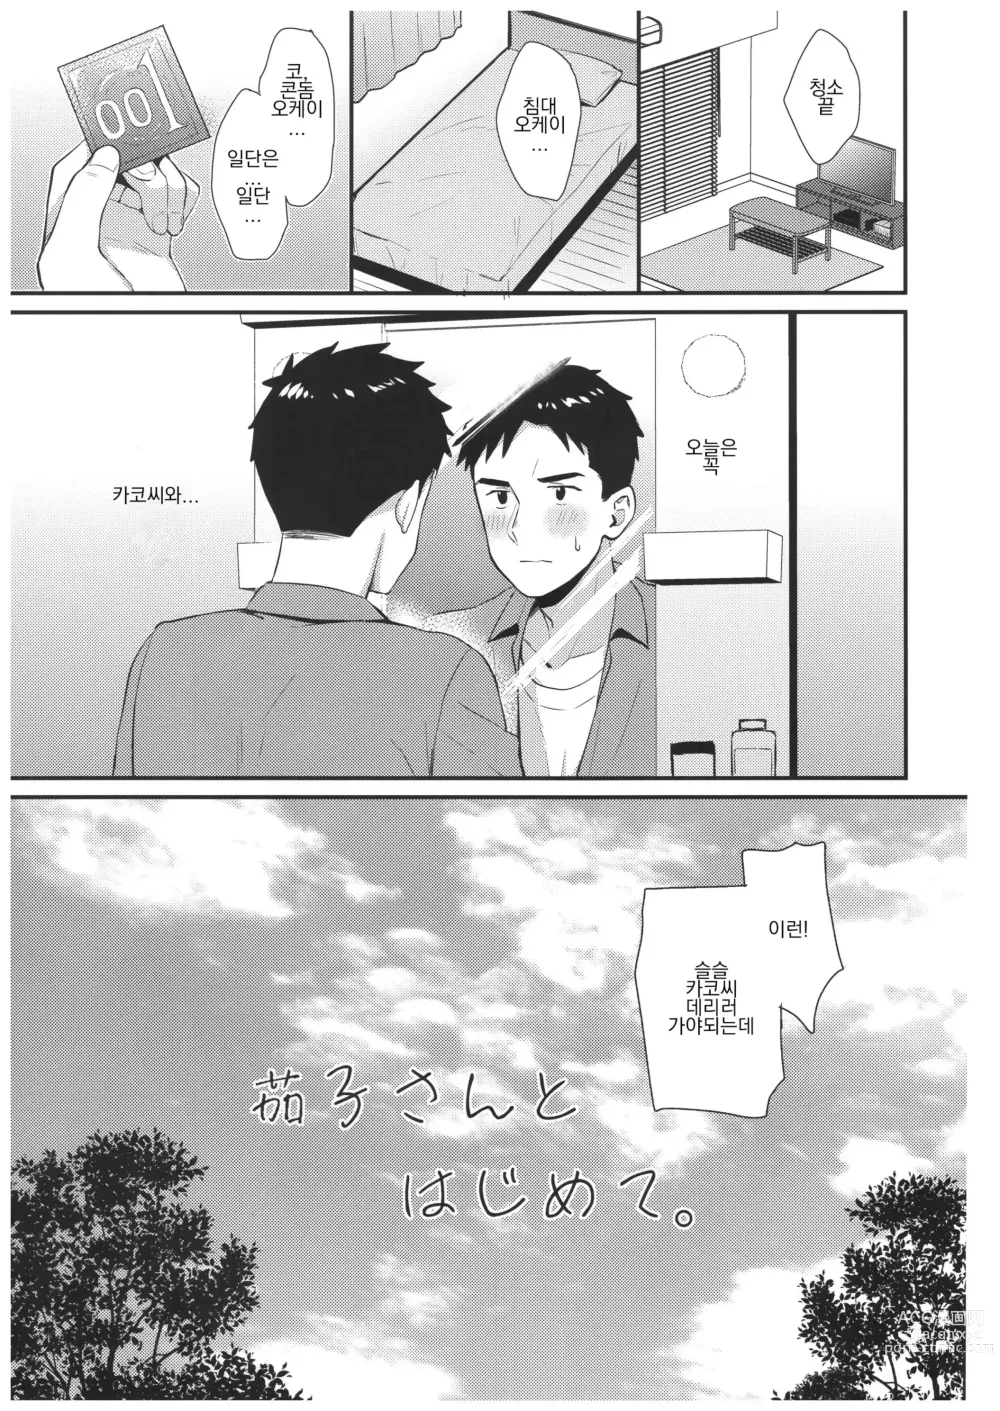 Page 4 of doujinshi 카코 씨와 첫 경험.